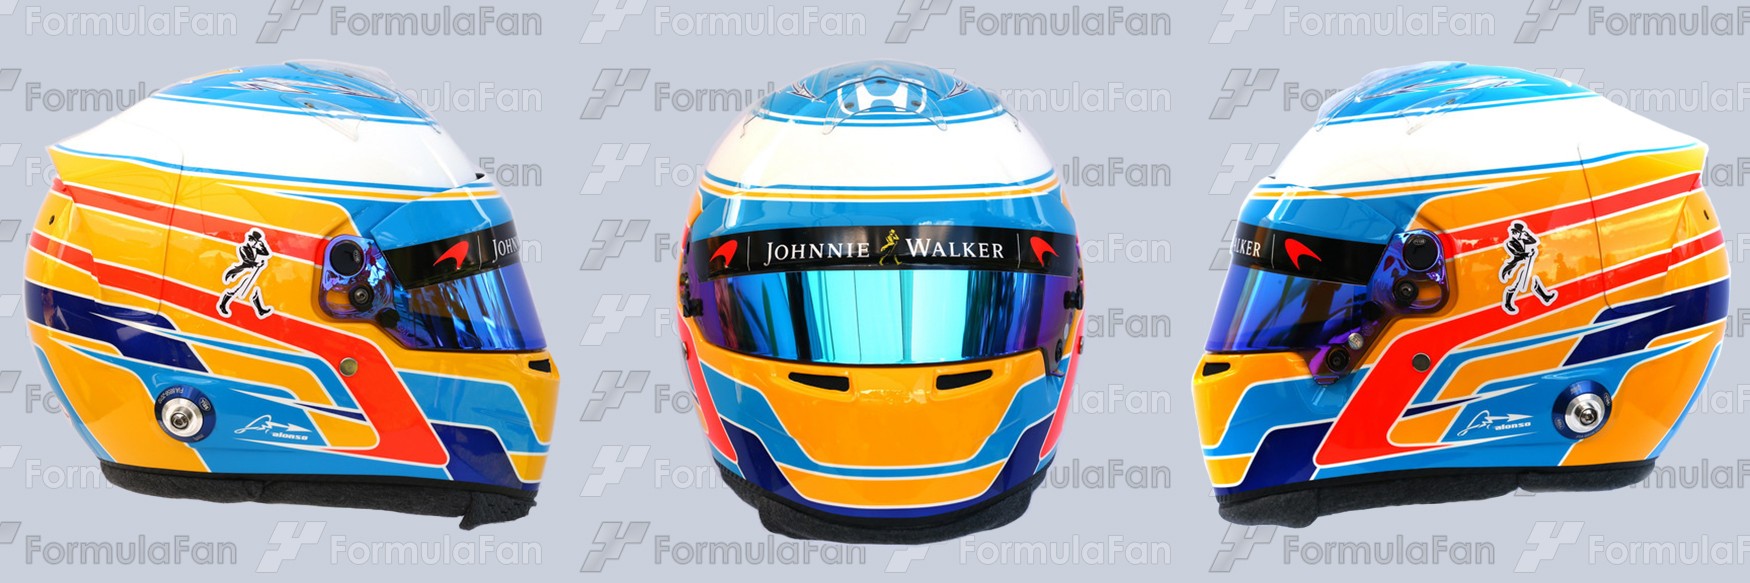 Шлем Фернандо Алонсо на сезон 2017 года | 2017 helmet of Fernando Alonso